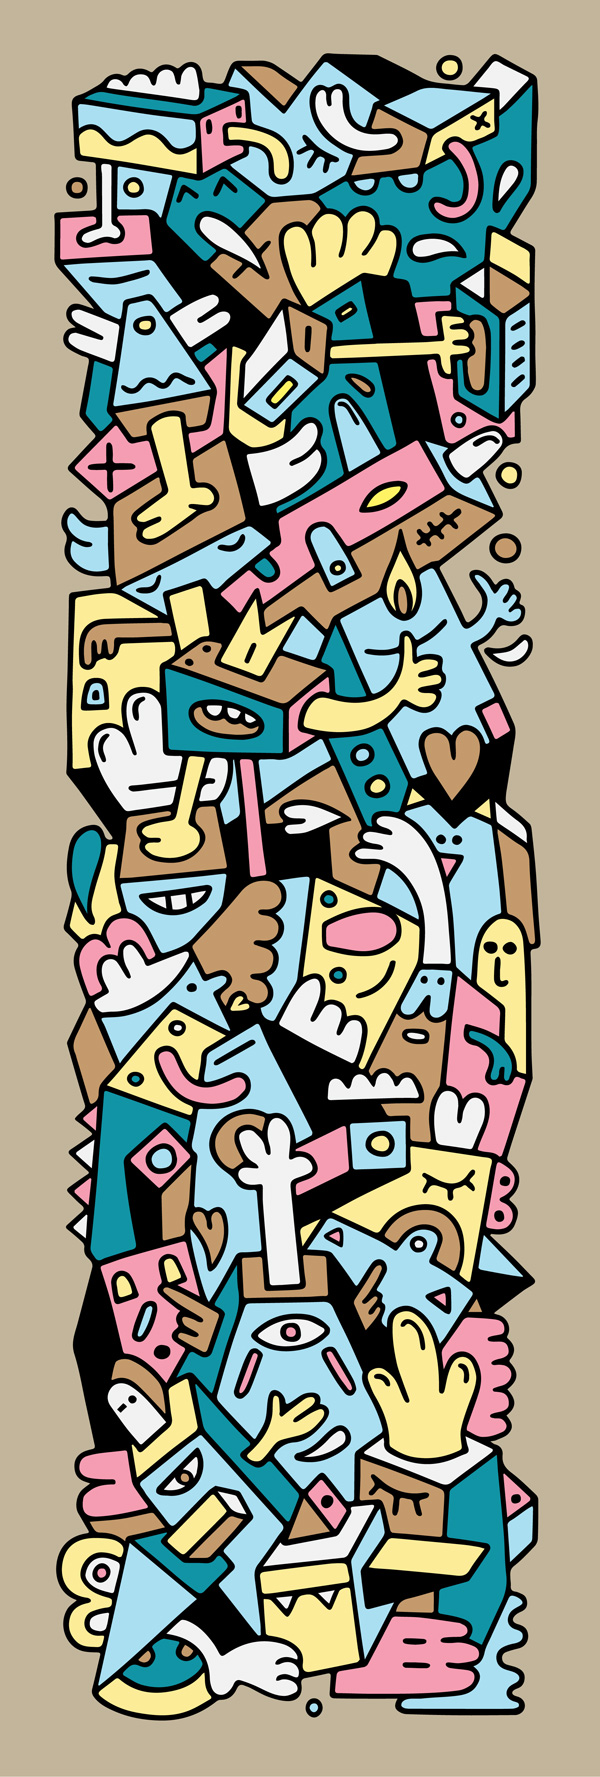 Totem - Mister Phil Illustration